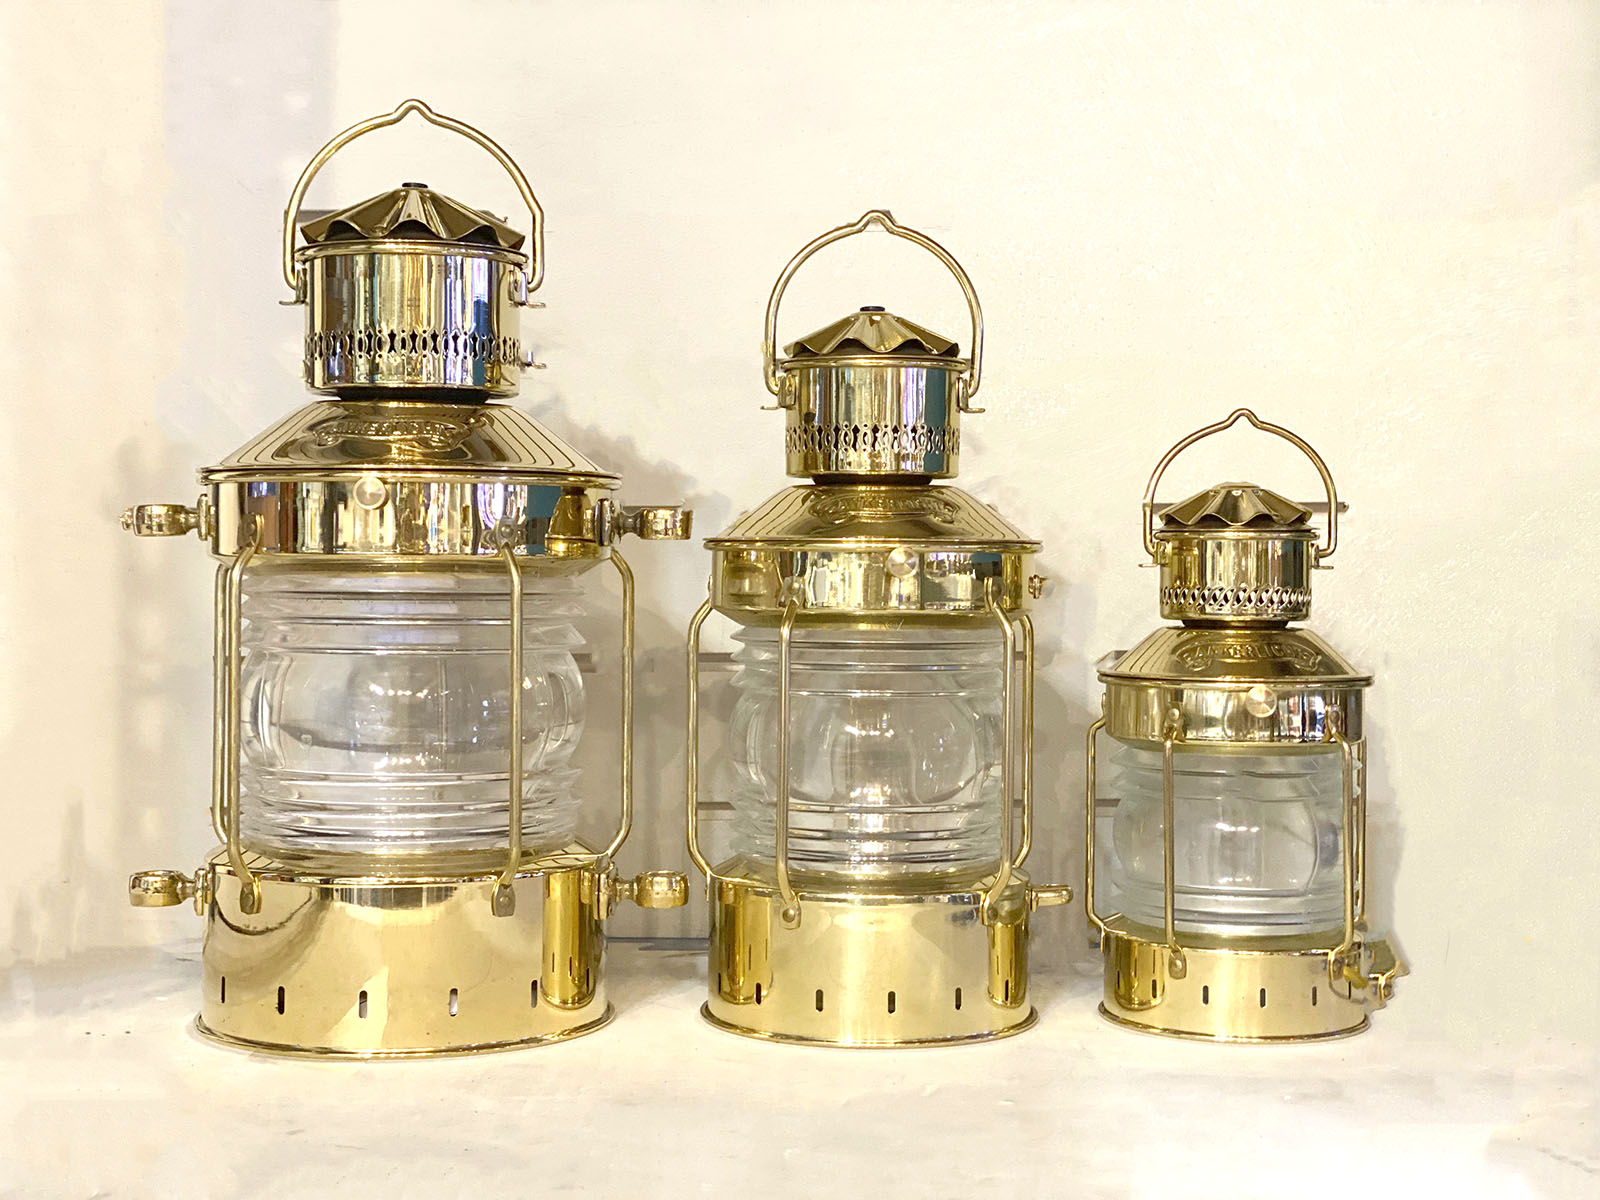 https://www.shiplights.com/wp-content/uploads/2021/07/Nautical-Lantern-Anchor-Light-Table-Lamps-Shiplights.jpg